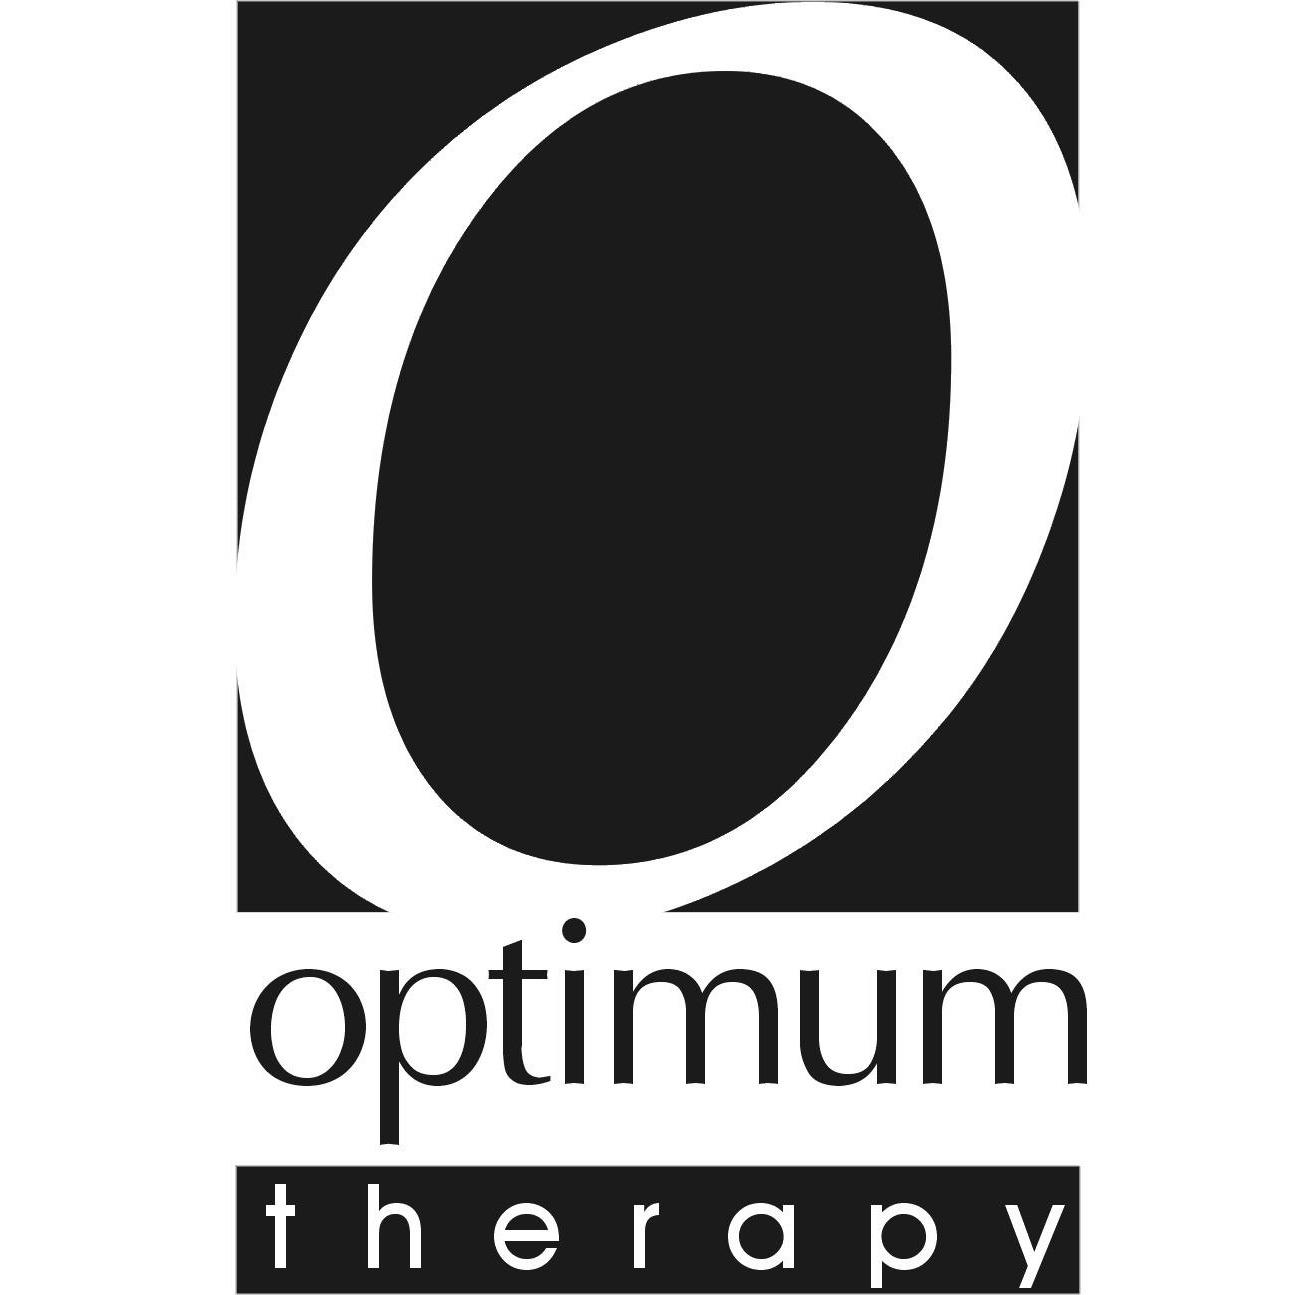 Optimum Therapy - McAllen, TX 78504 - (956)664-9955 | ShowMeLocal.com